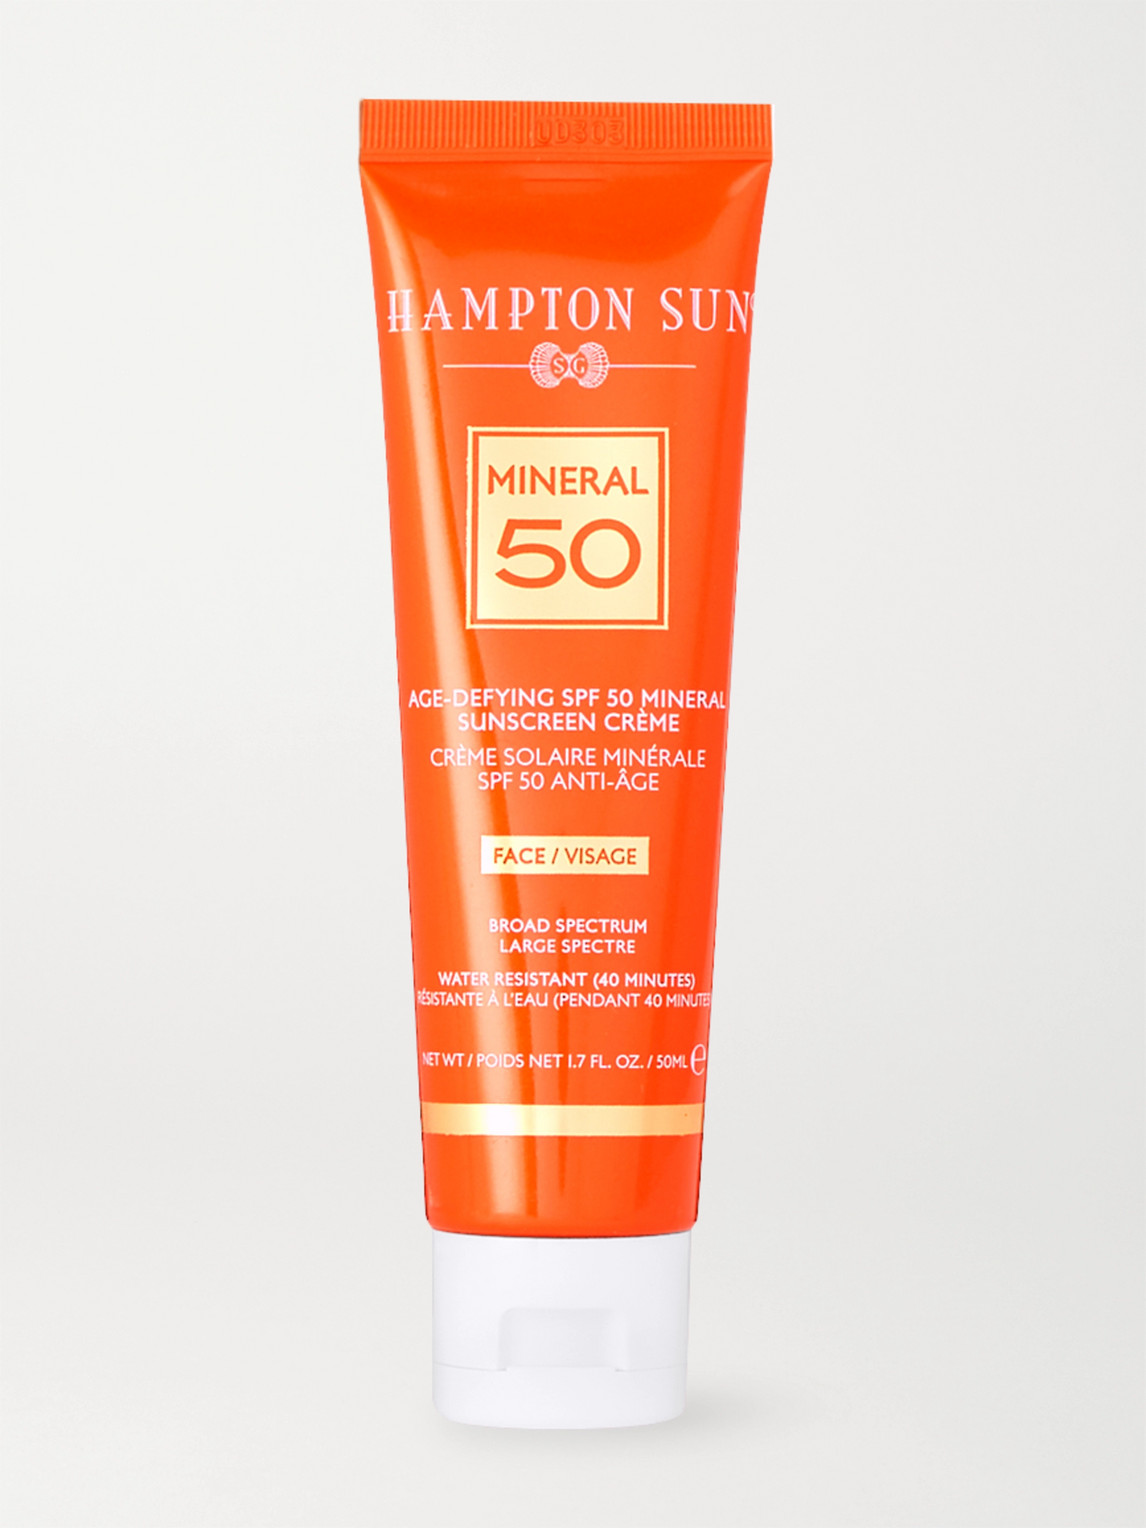 HAMPTON SUN AGE-DEFYING SPF50 MINERAL CRÈME SUNSCREEN FOR FACE, 50ML